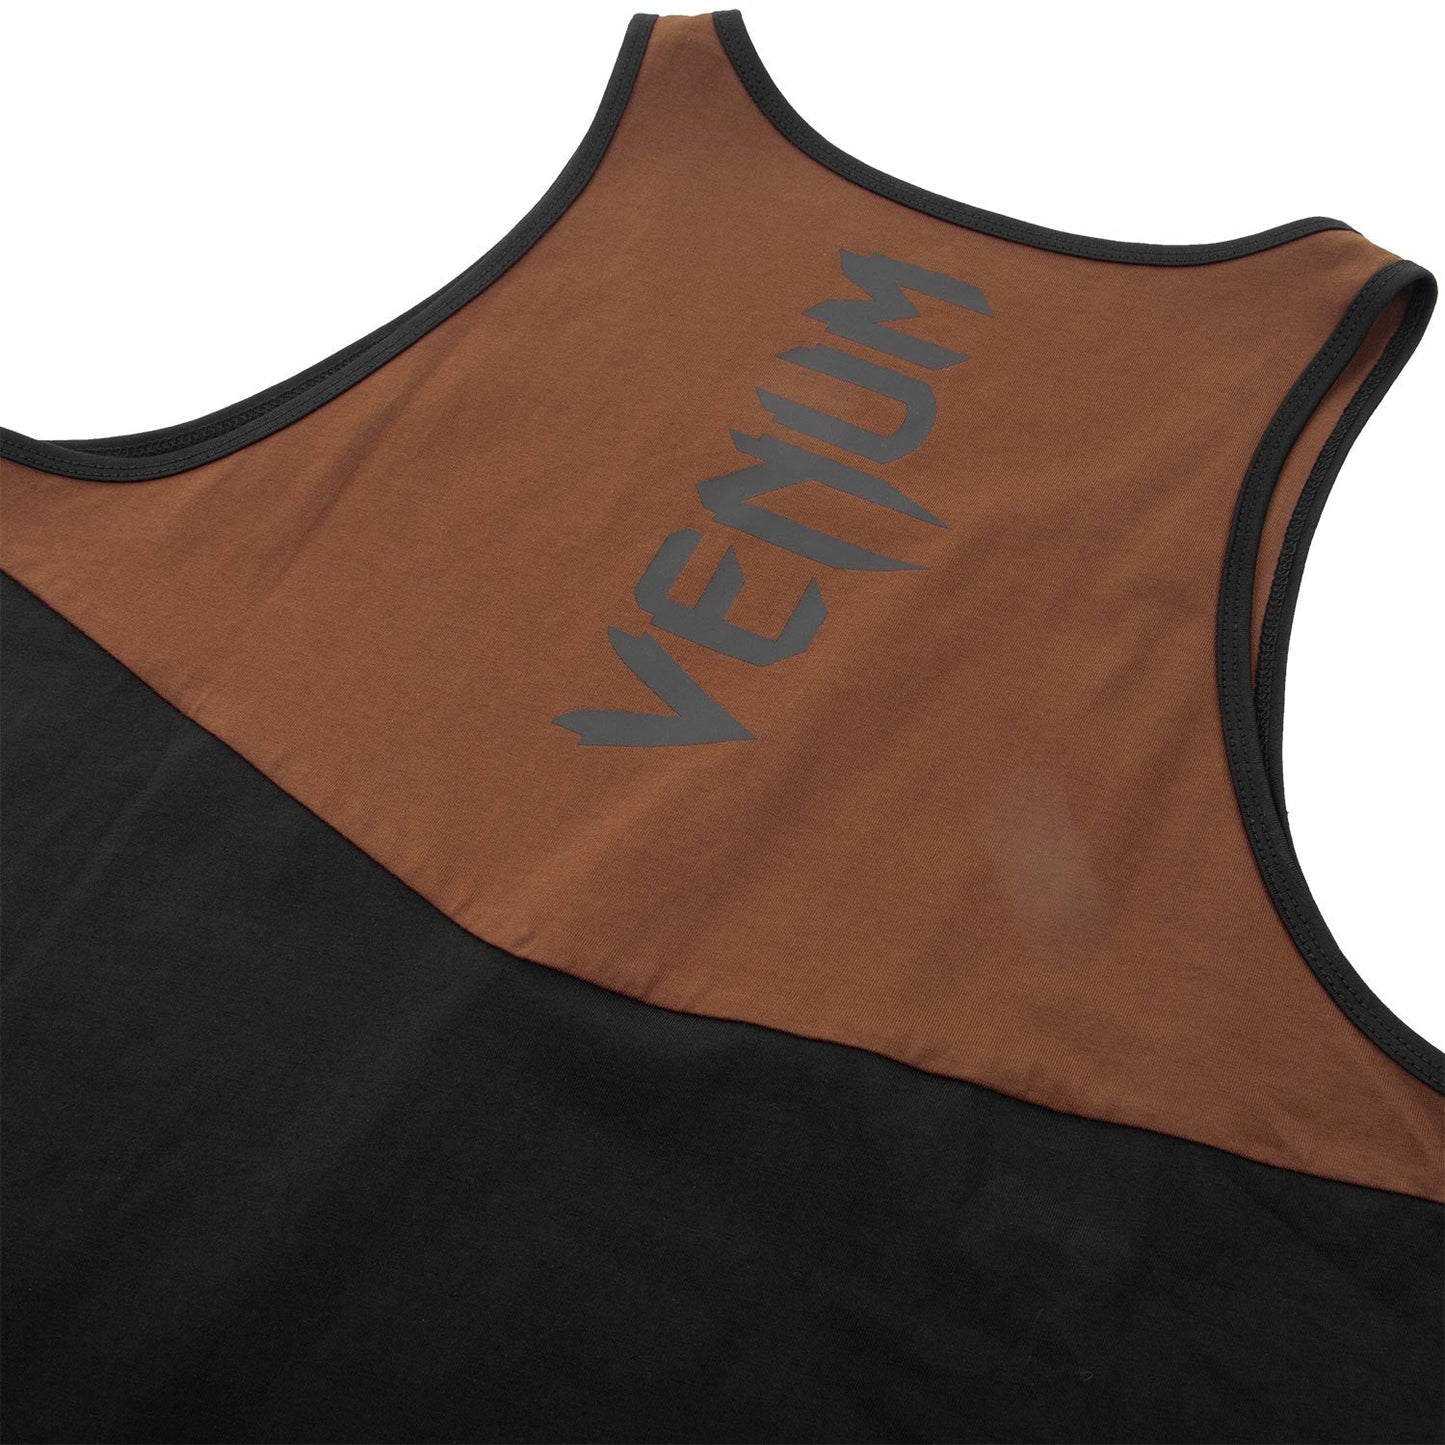 Venum Laser Classic Tank Top - Black/Brown - Exclusive